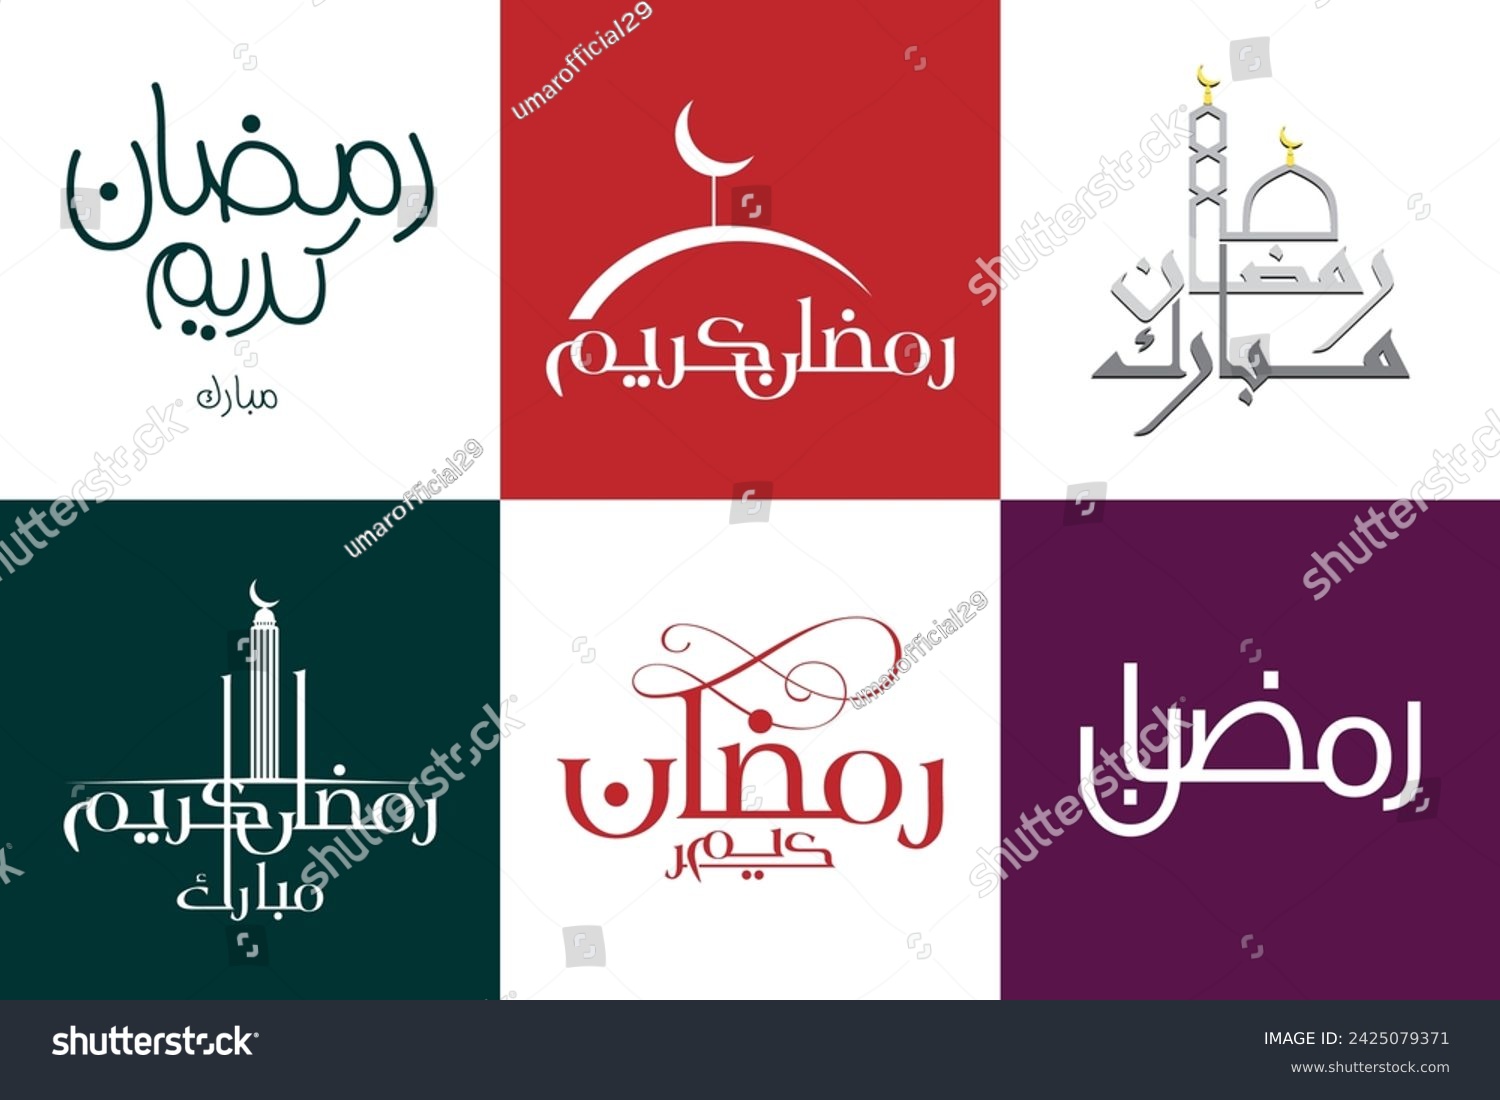 SVG of ramadan kareem Calligraphy, Ramzan Mubarak, Caligraphy, islamic calligraphy, Ayat Kareem, quran ayat, Translation: 